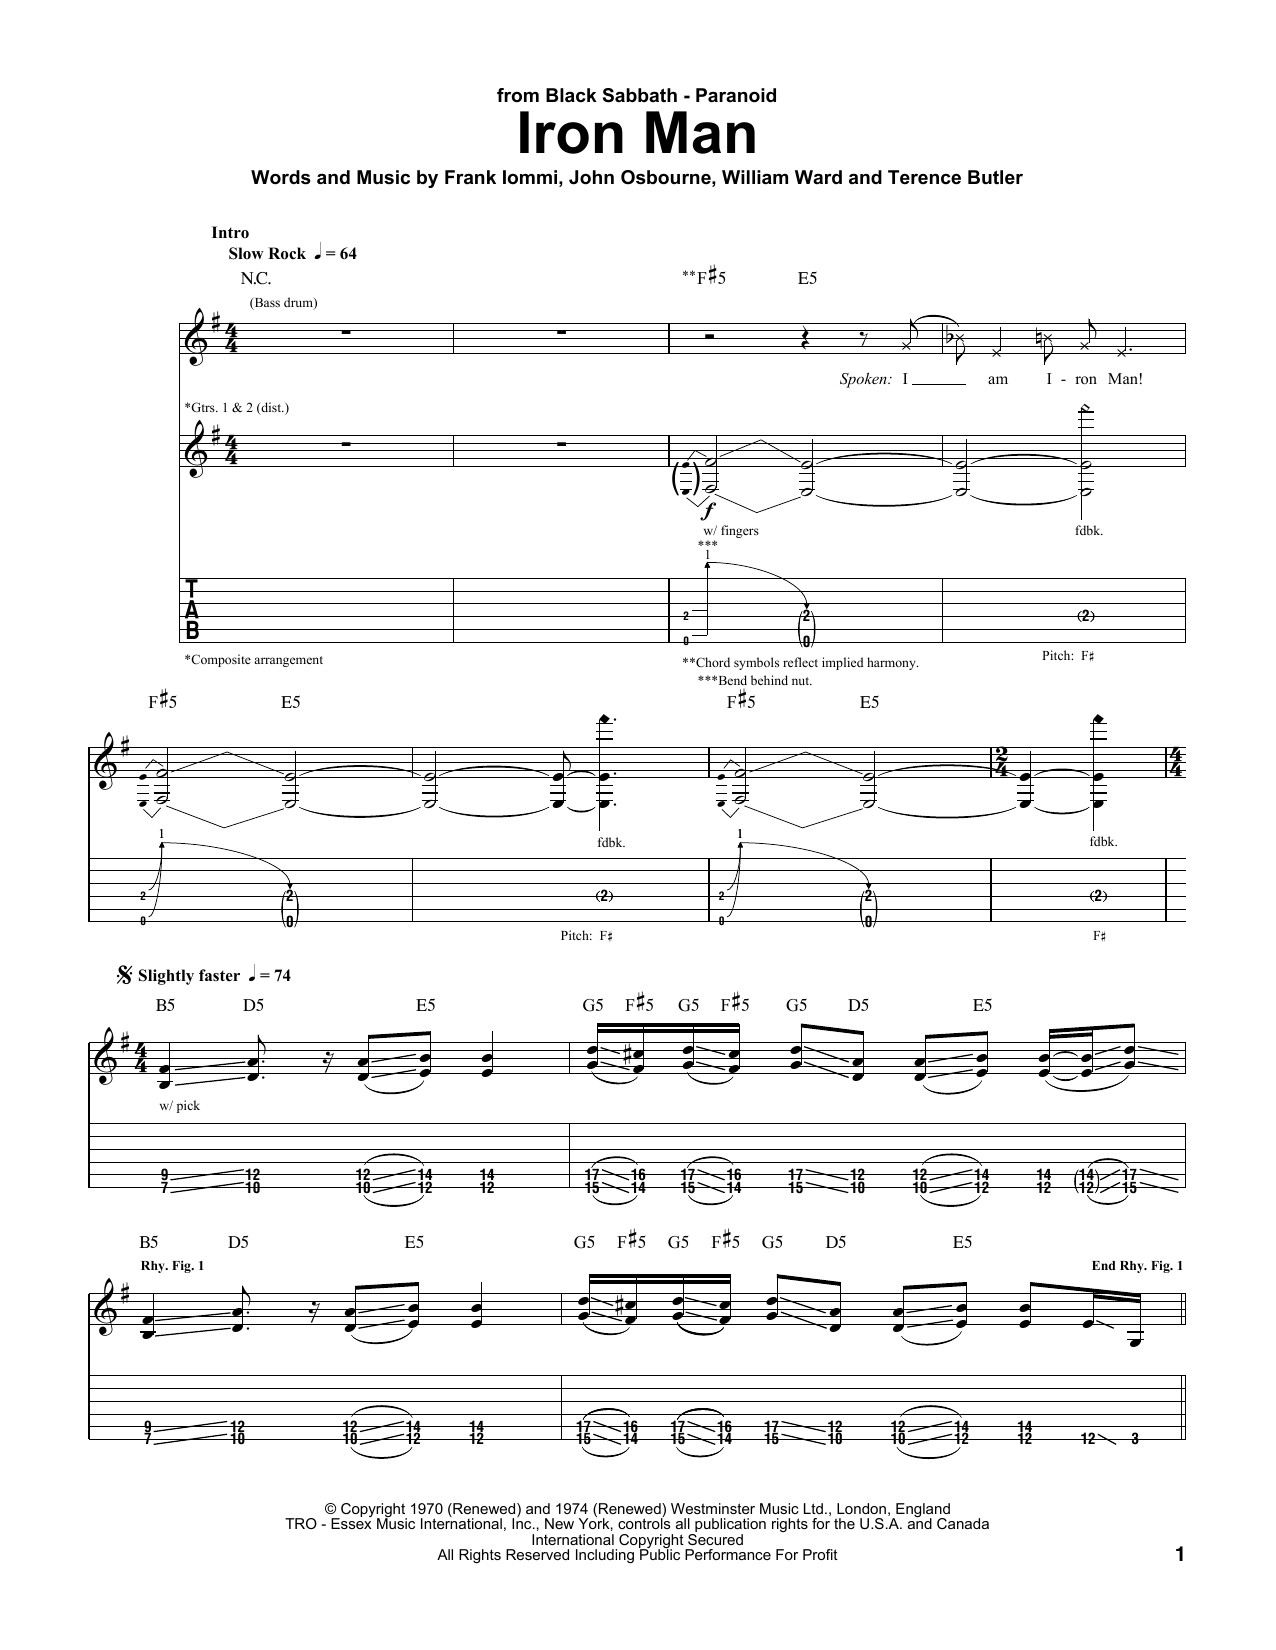 Black Sabbath Iron Man sheet music notes printable PDF score